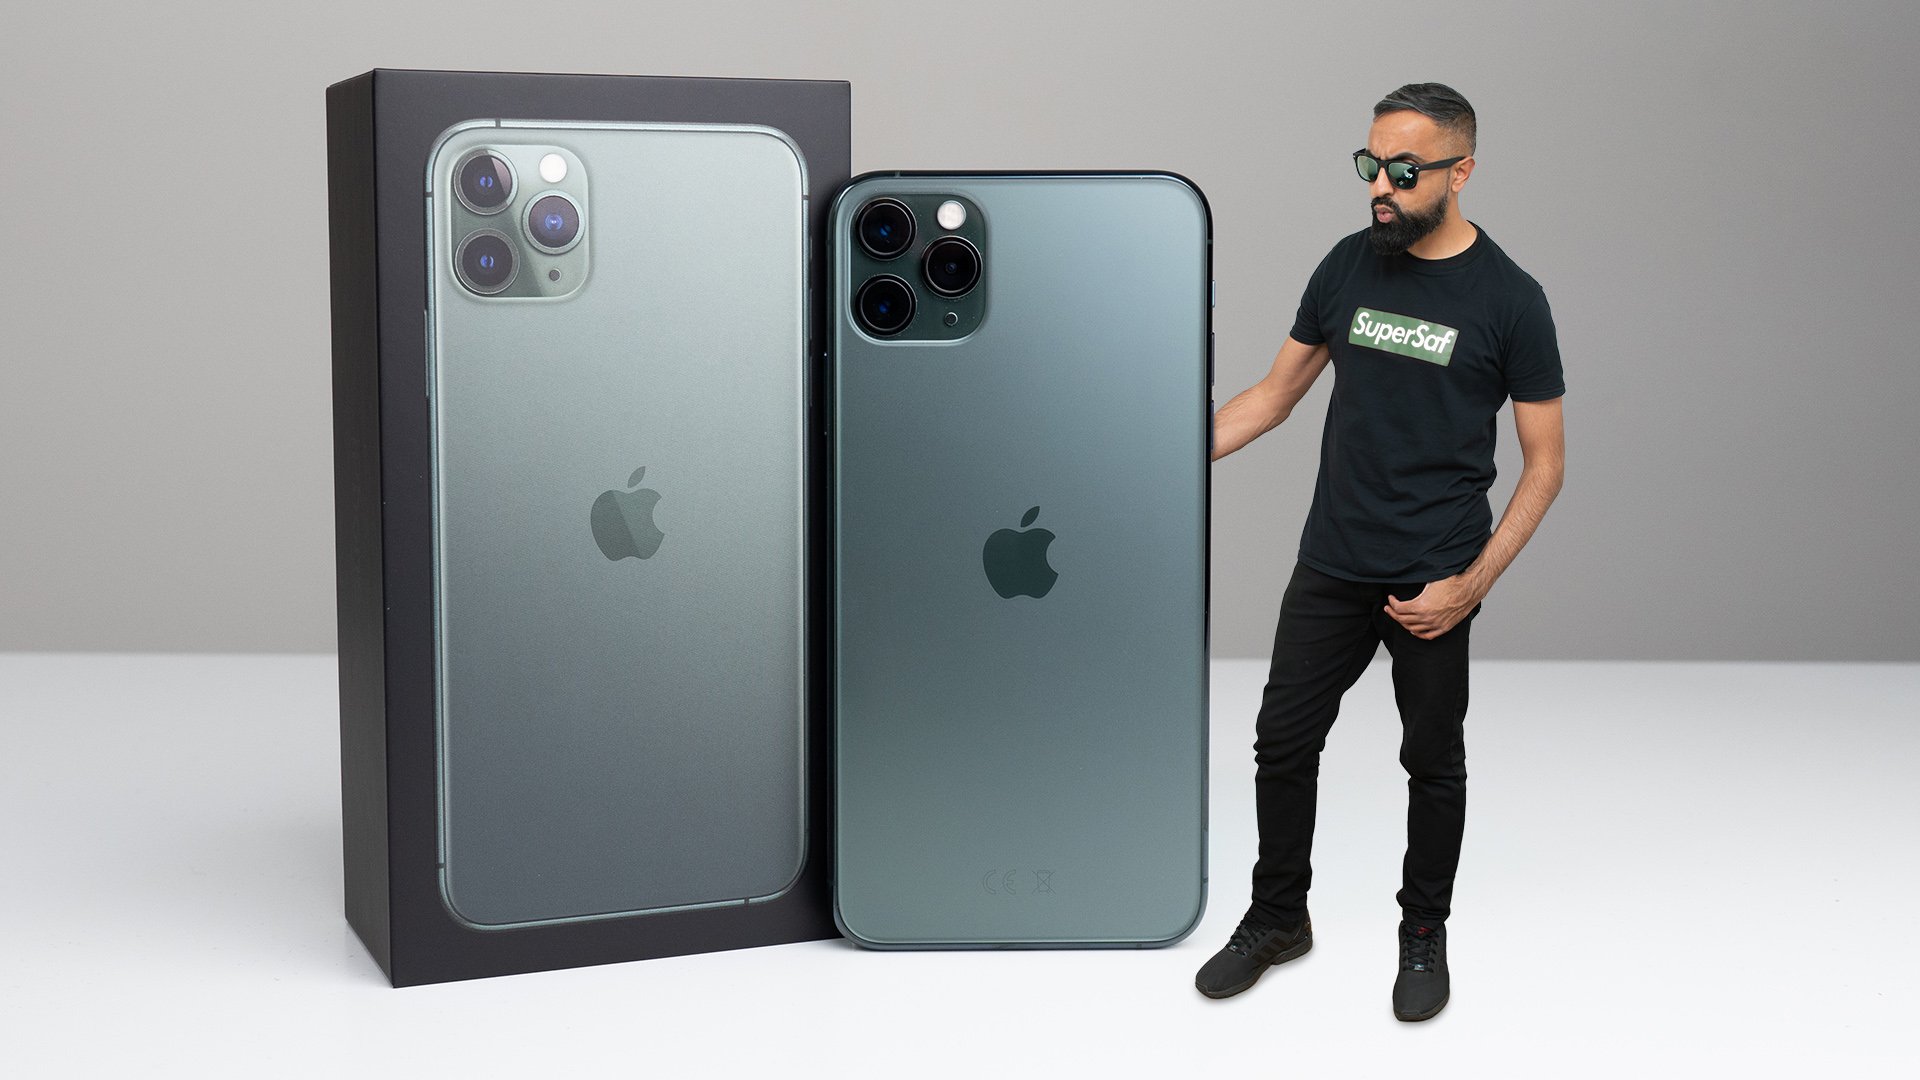 Safwan Ahmedmia New Video Unboxing The Iphone 11 Pro Max In Midnight Green T Co Ecmlcoomwx Rts Appreciated T Co Wtprqtxsik Twitter